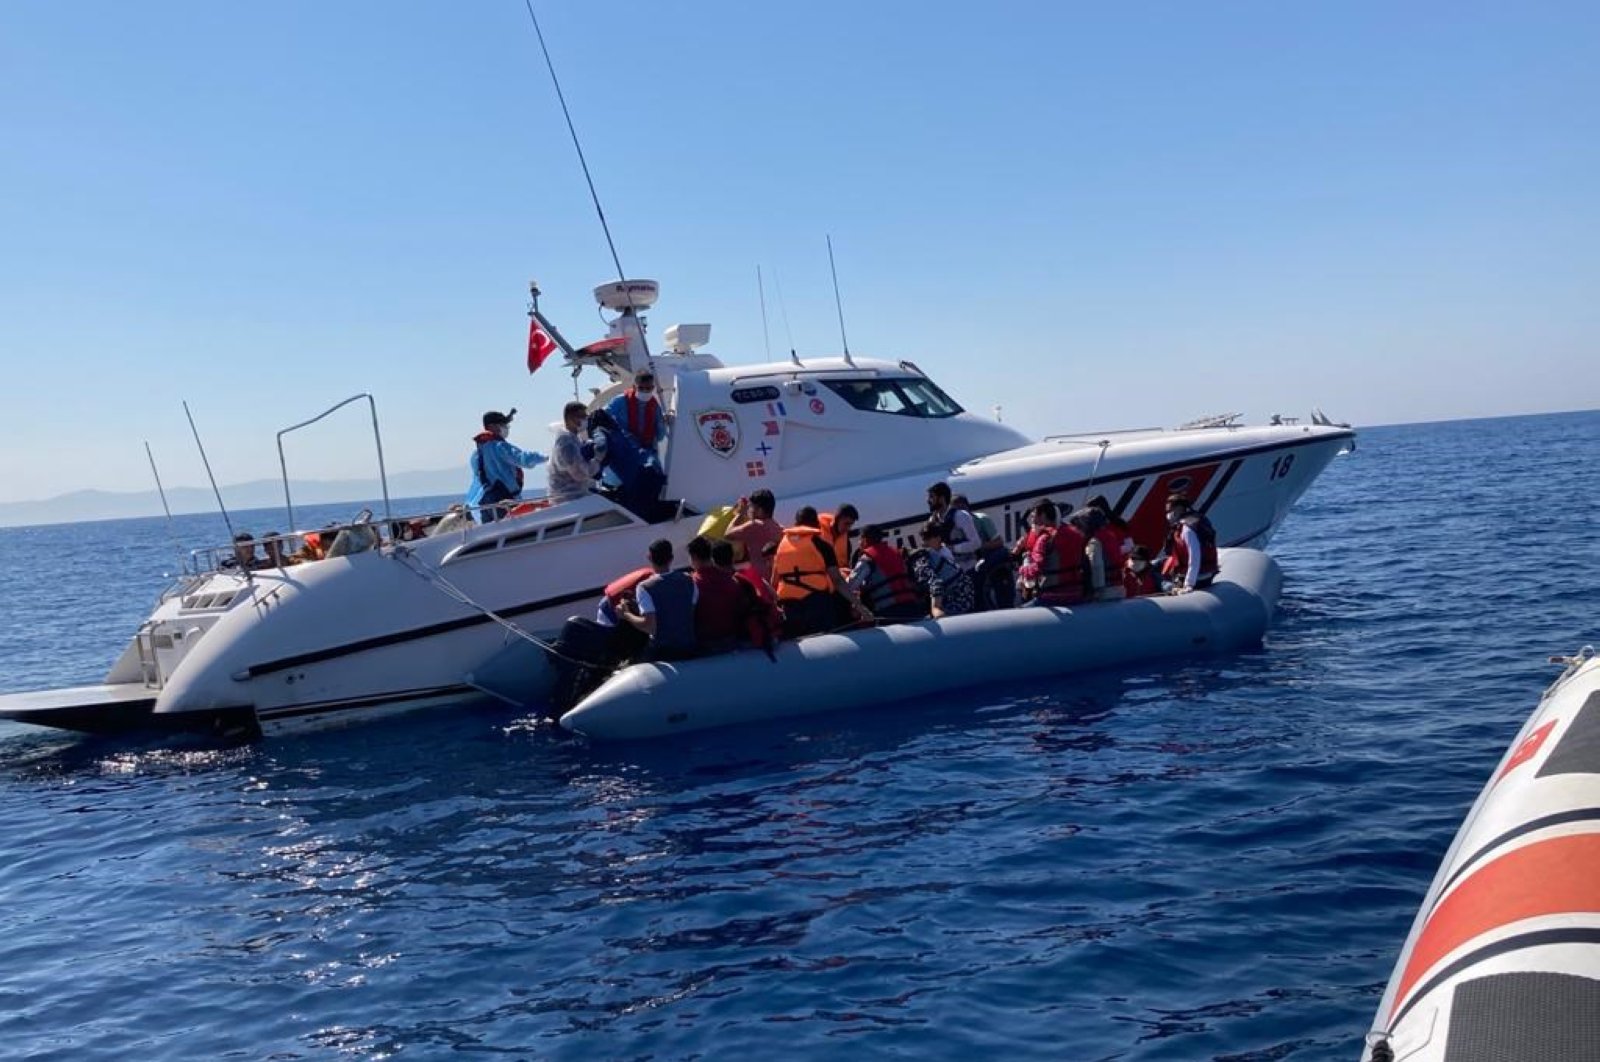 The Turkish coast guard saves the migrants in the Aegean Sea, July 21, 2020. (DHA Photo)